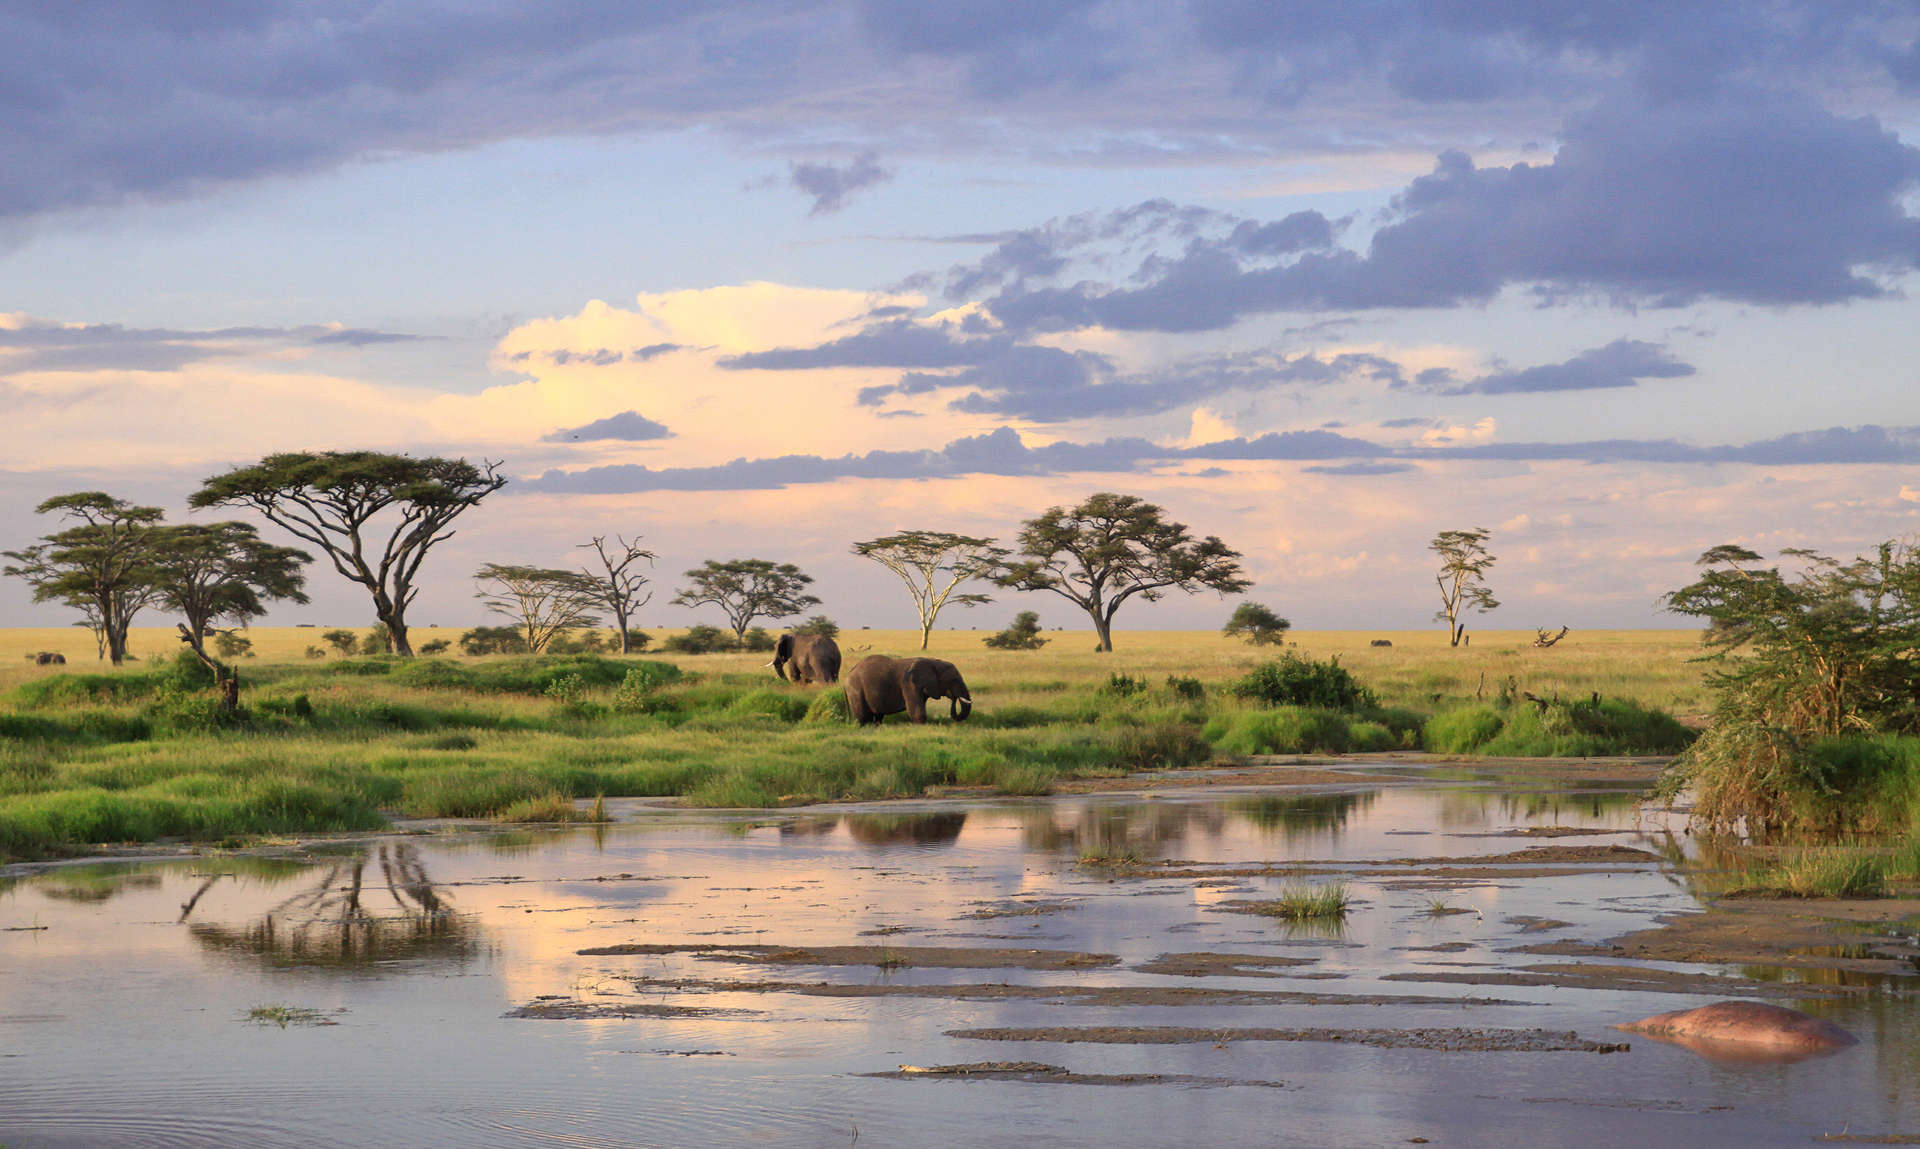 A January safari in Tanzania definitely won’t disappoint